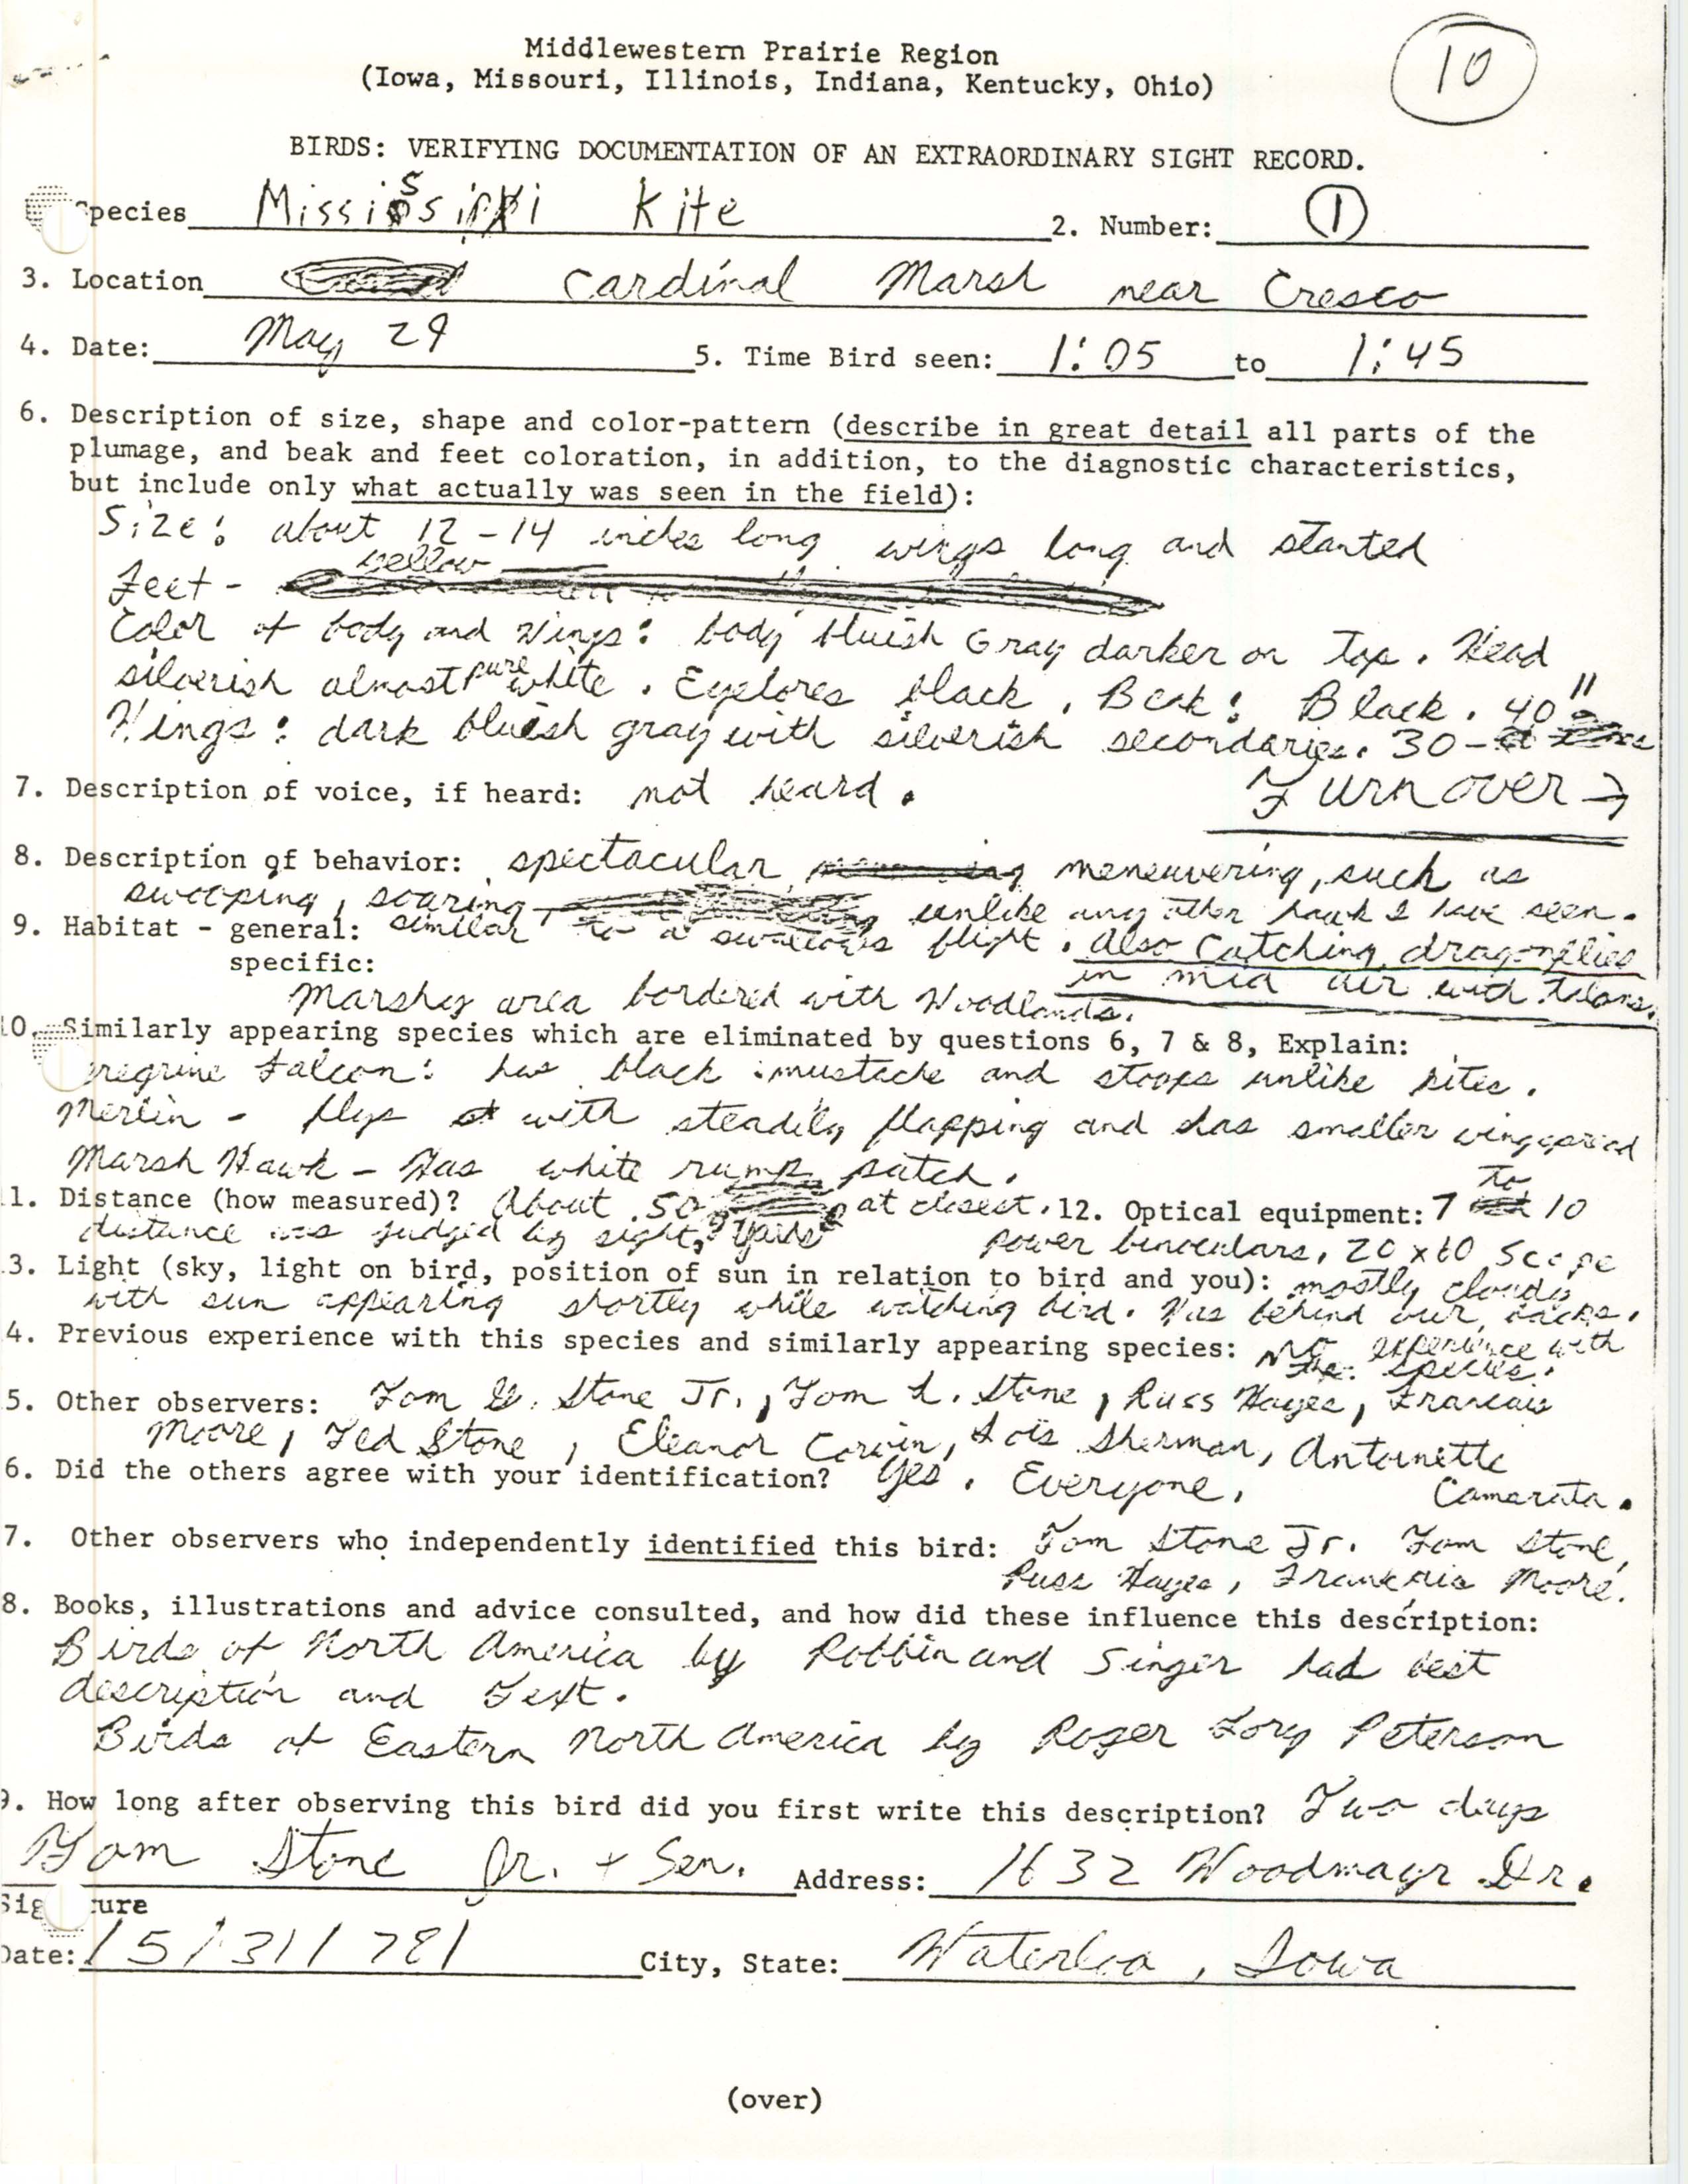 Rare bird documentation form for Mississippi Kite at Cardinal Marsh, 1978